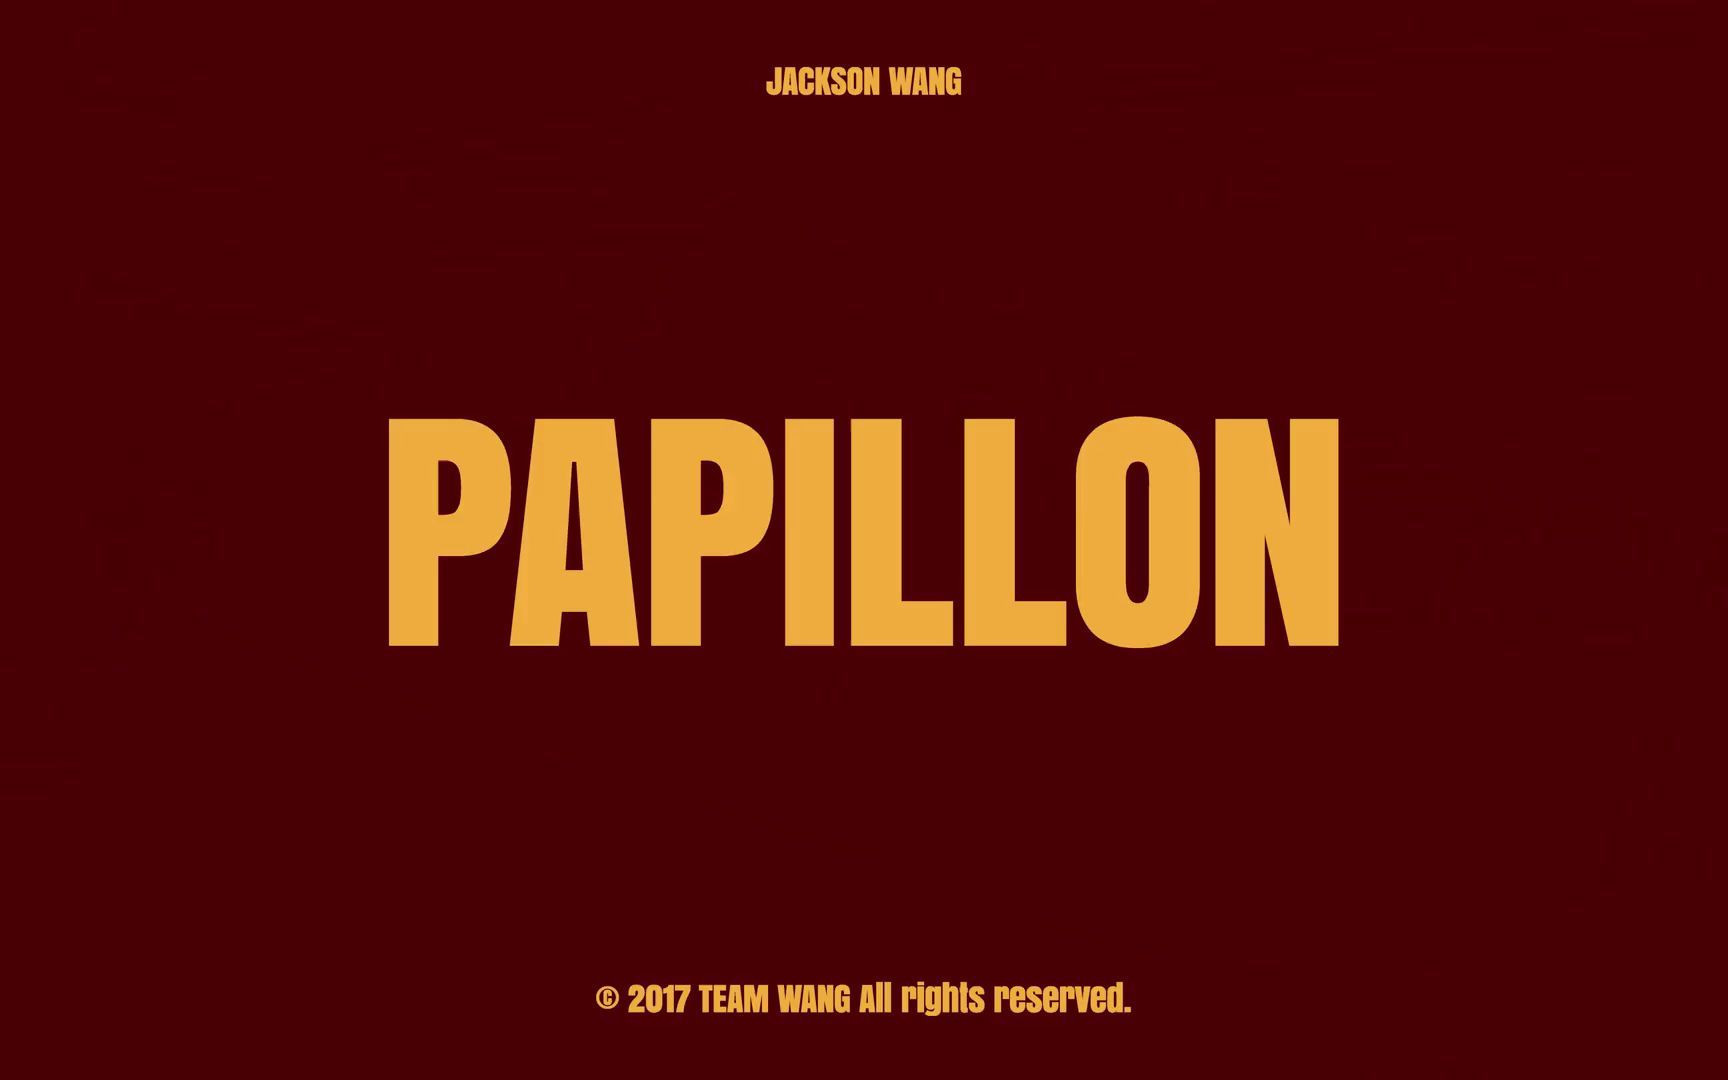 【王嘉尔】Jackson Wang《Papillon》官方MV